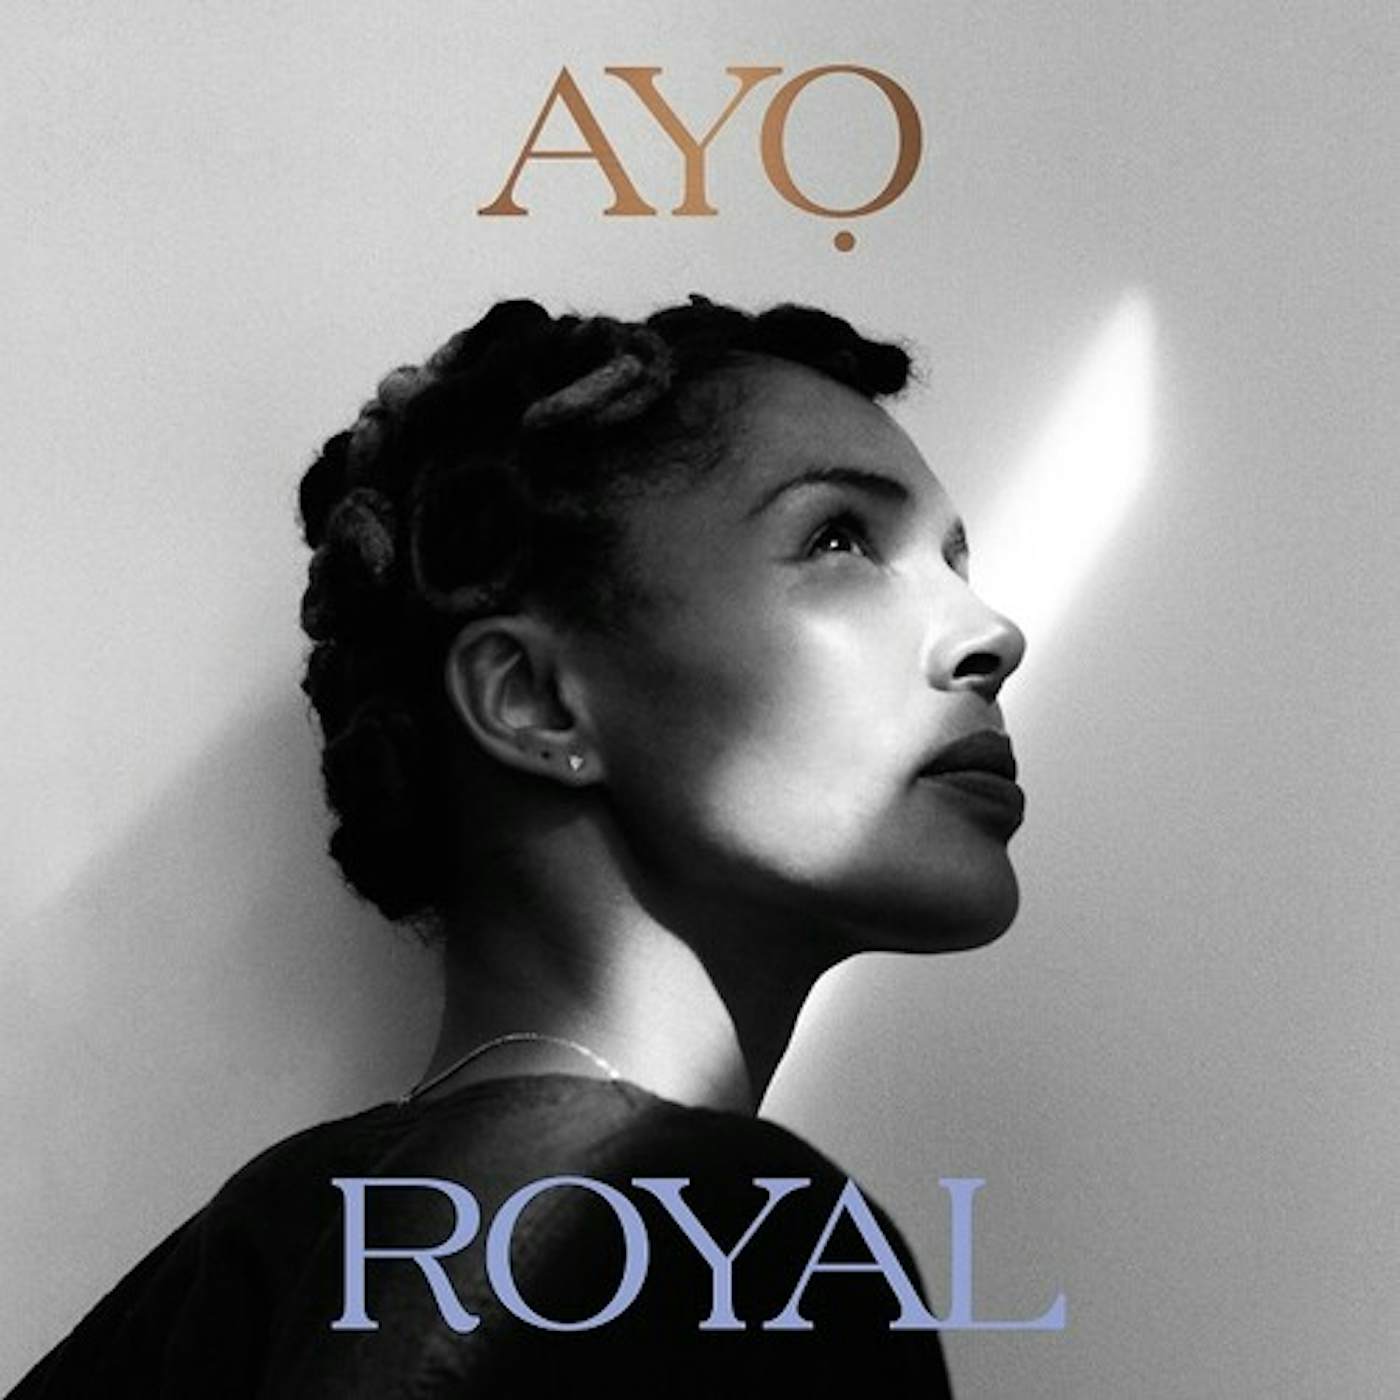 Ayo ROYAL - NEW EDITION CD